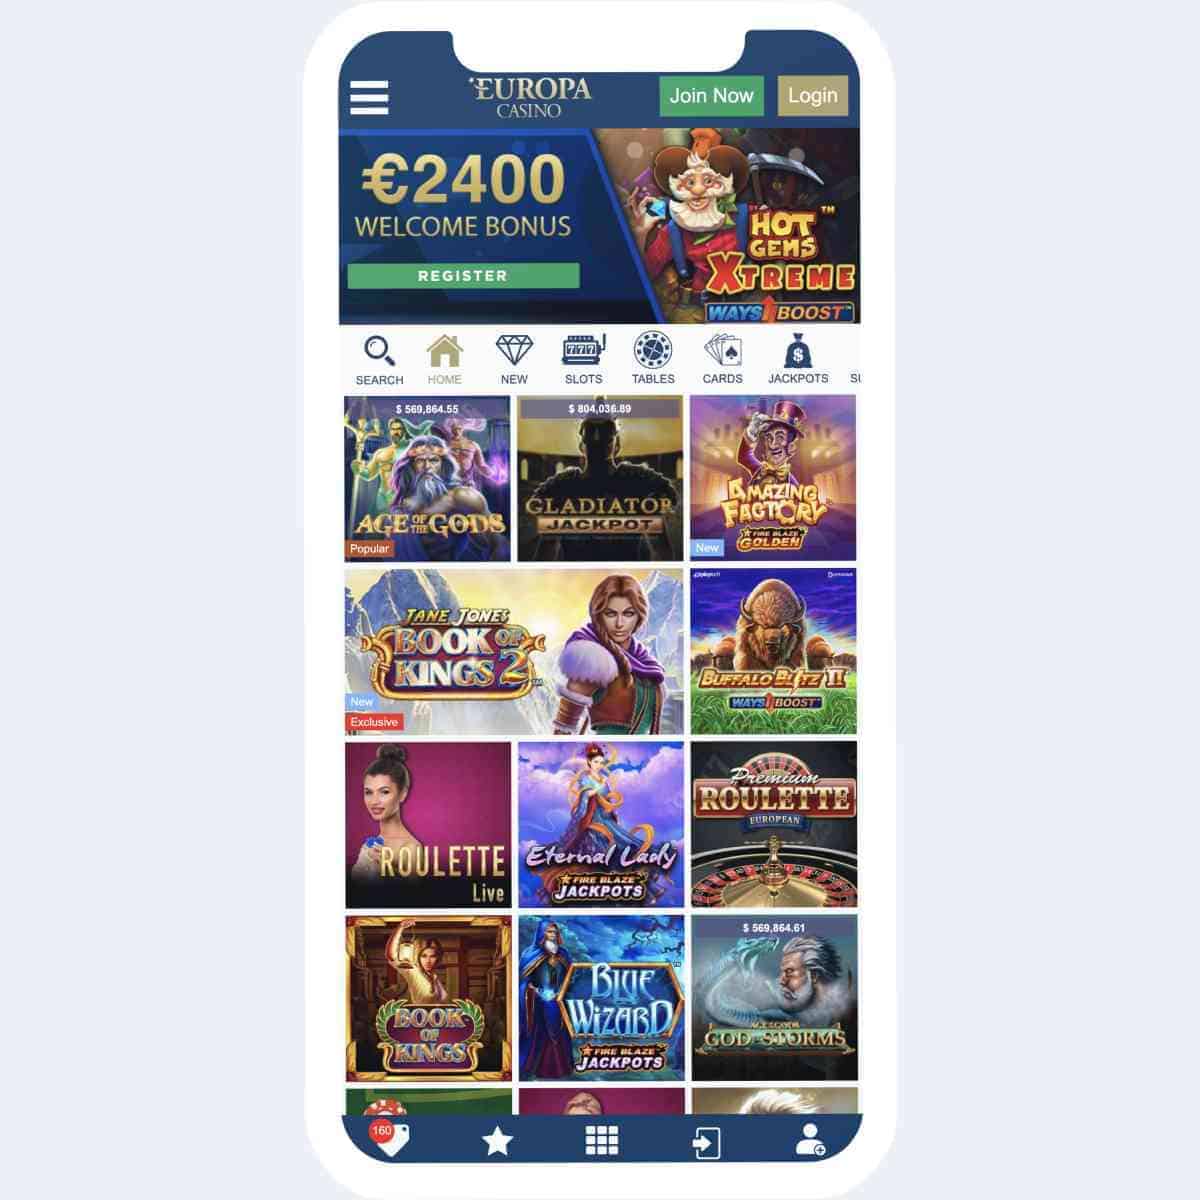 europa casino homepage mobile